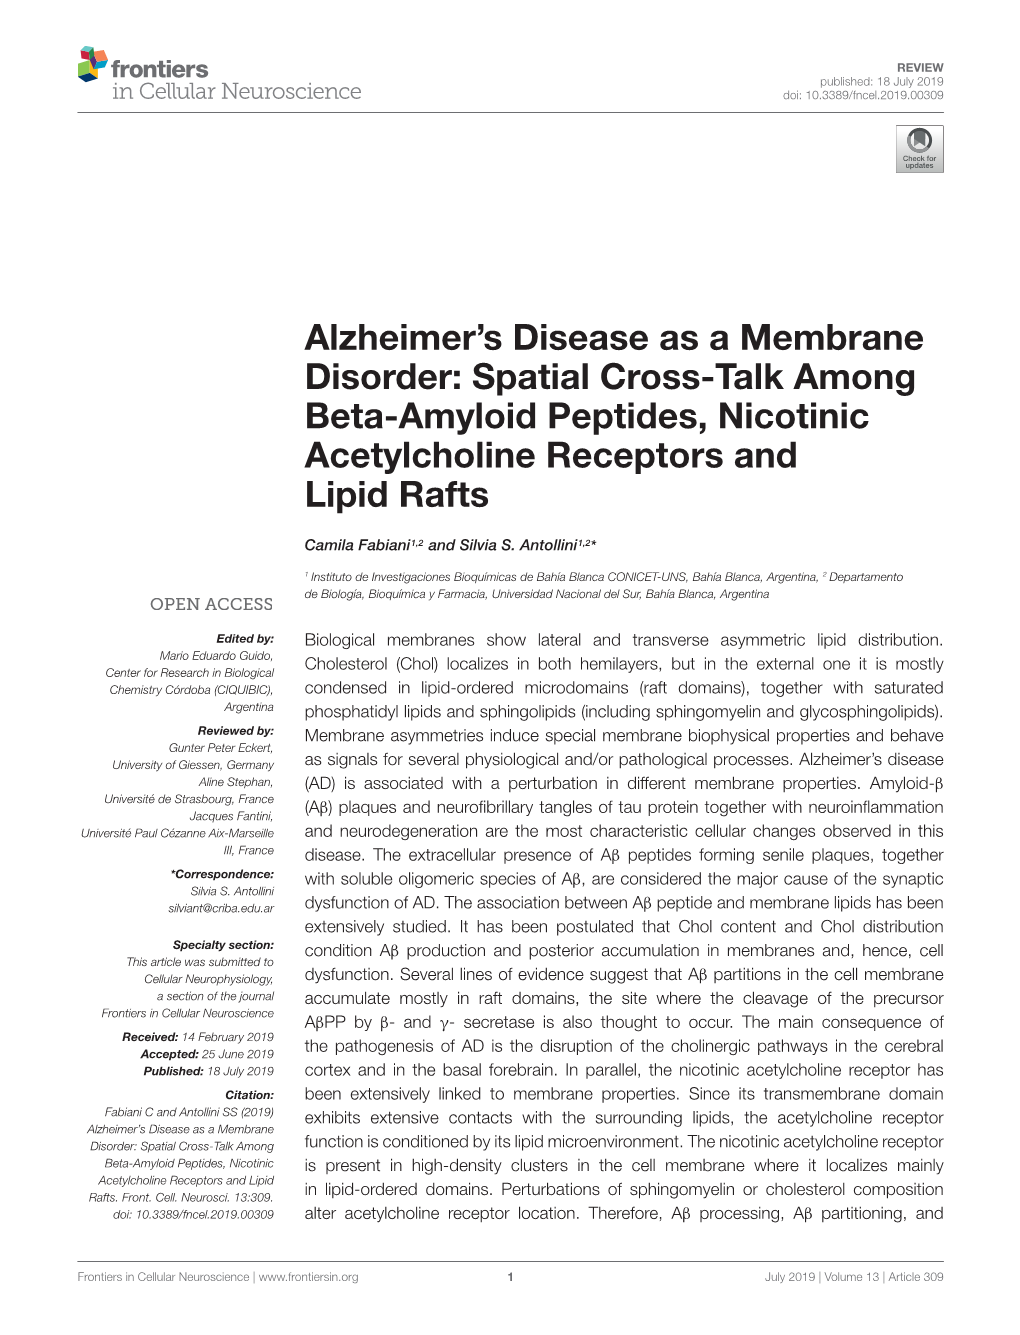 Alzheimer's Disease As a Membrane Disorder